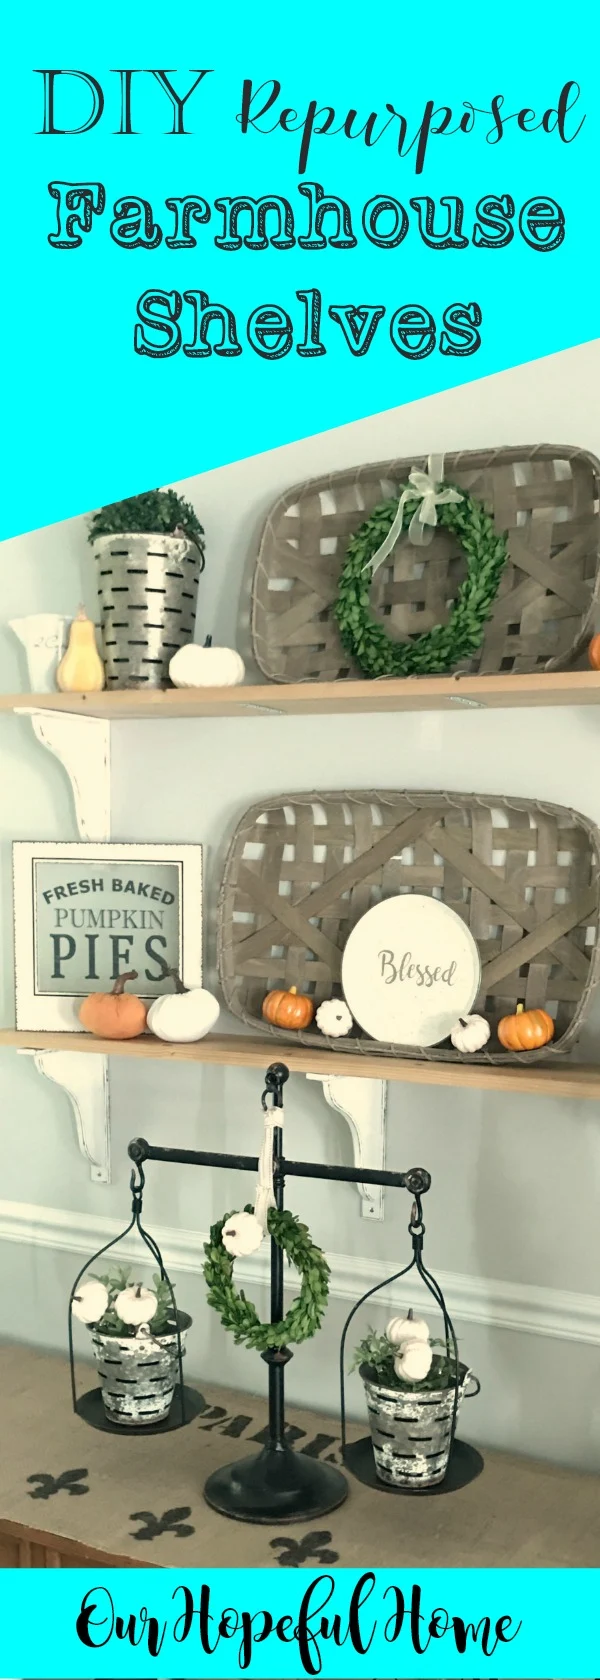 fall decor tobacco basket boxwood wreath velvet pumpkins pie sign shelves white corbels vintage scales